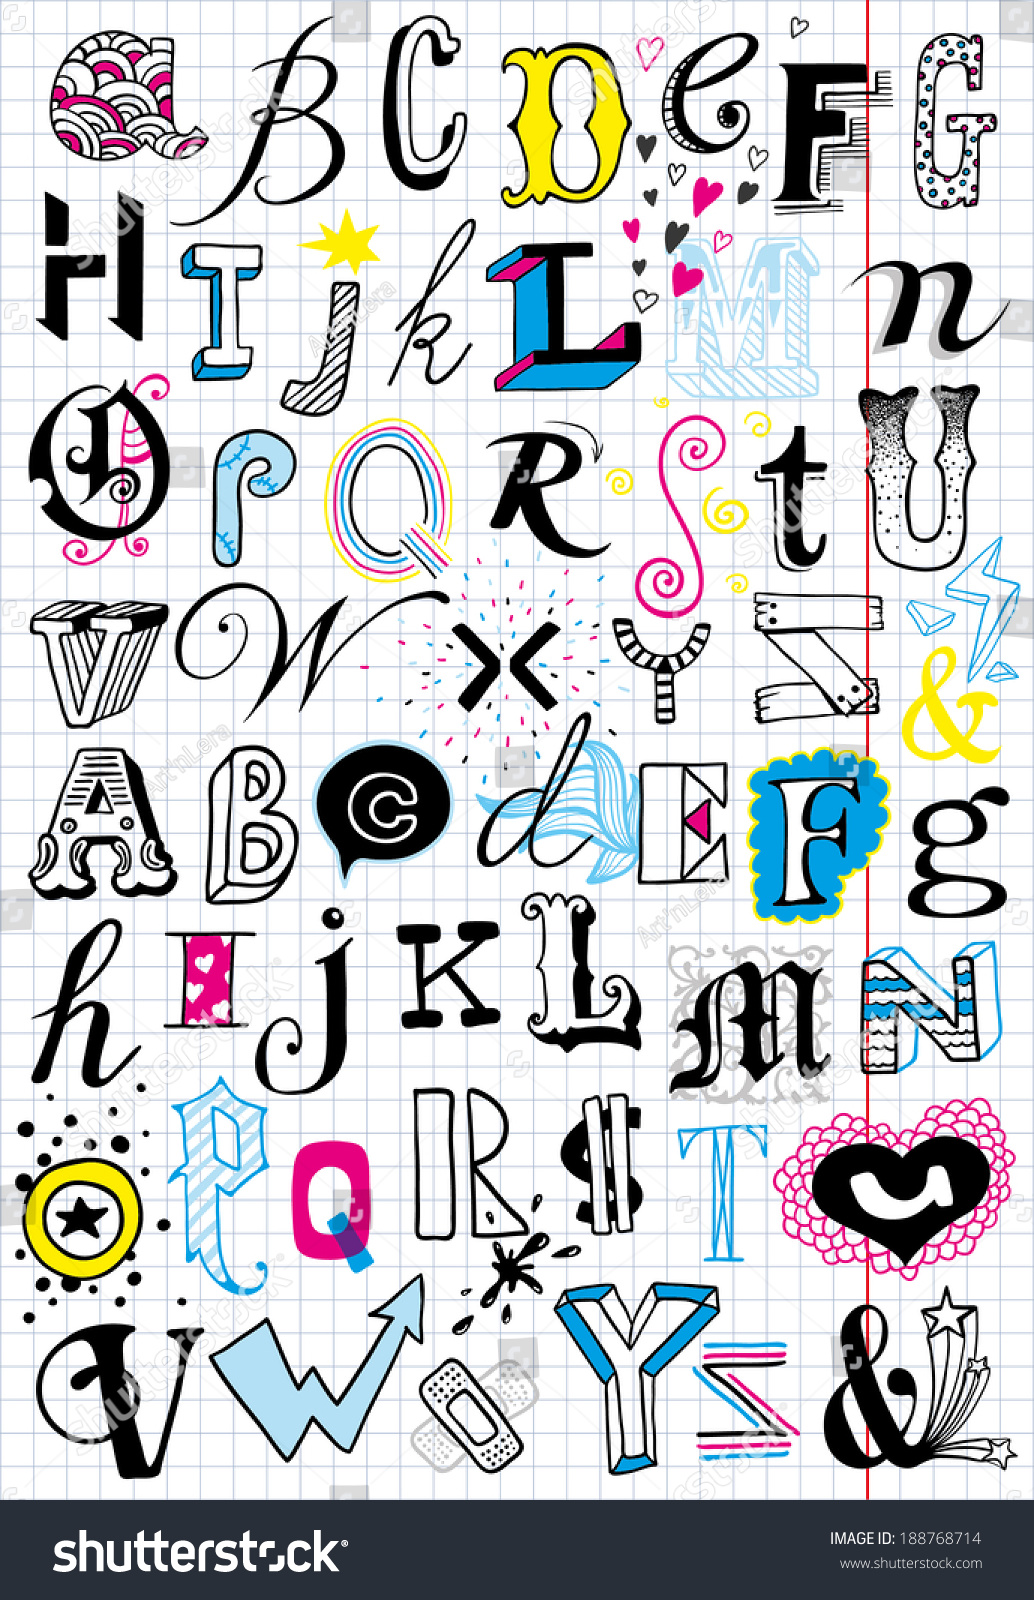 2 Handdrawn Doodle Alphabets Stock Vector 188768714 Shutterstock 3648